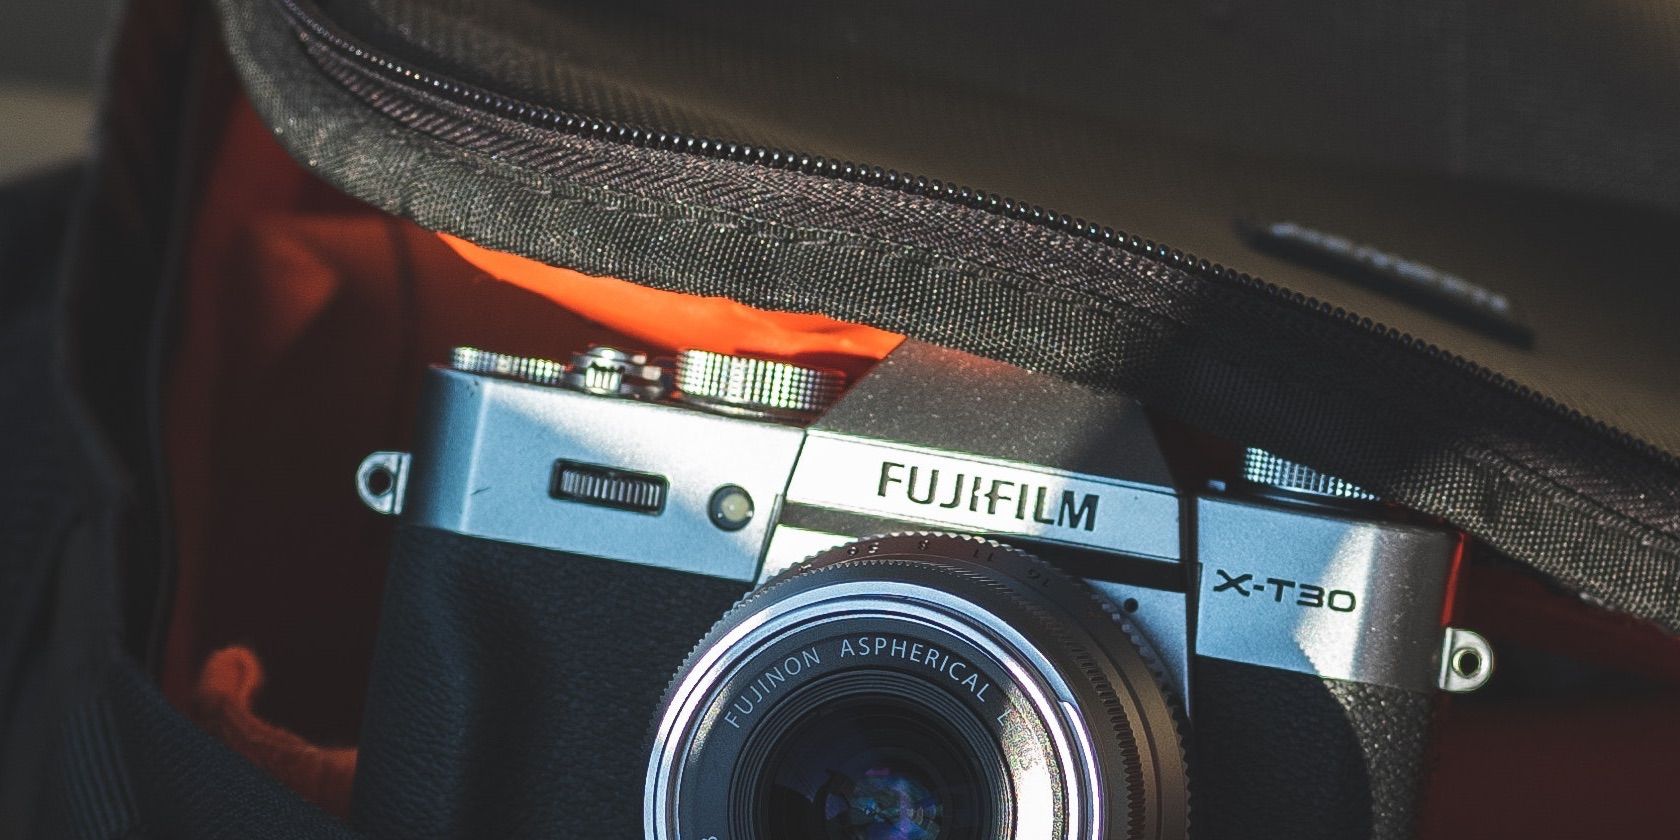 Photo of Fujifilm camera in a bag